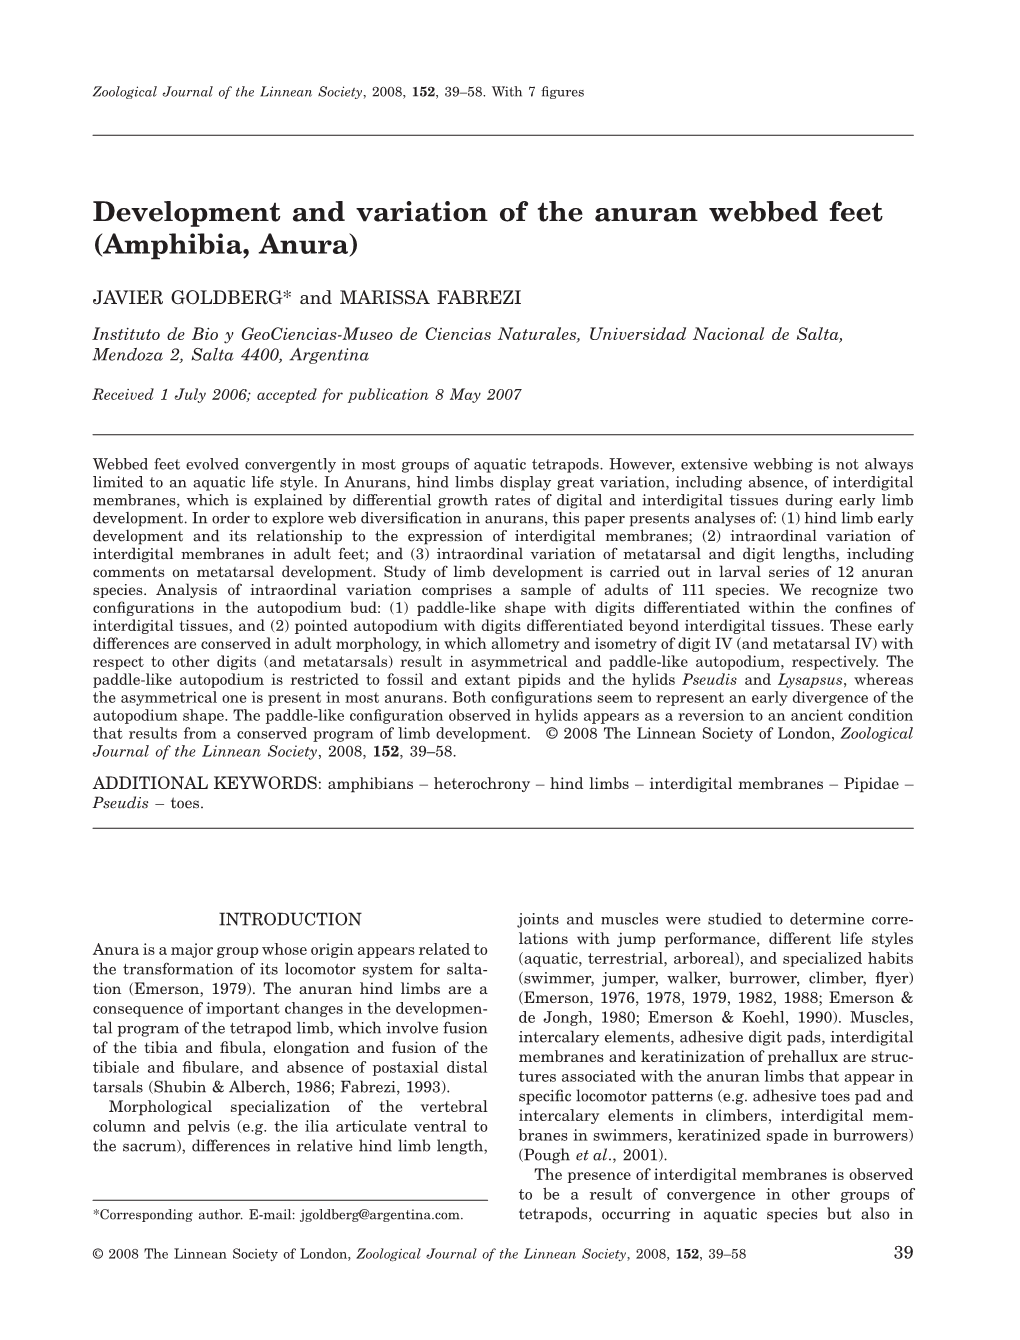 Development and Variation of the Anuran Webbed Feet (Amphibia, Anura)